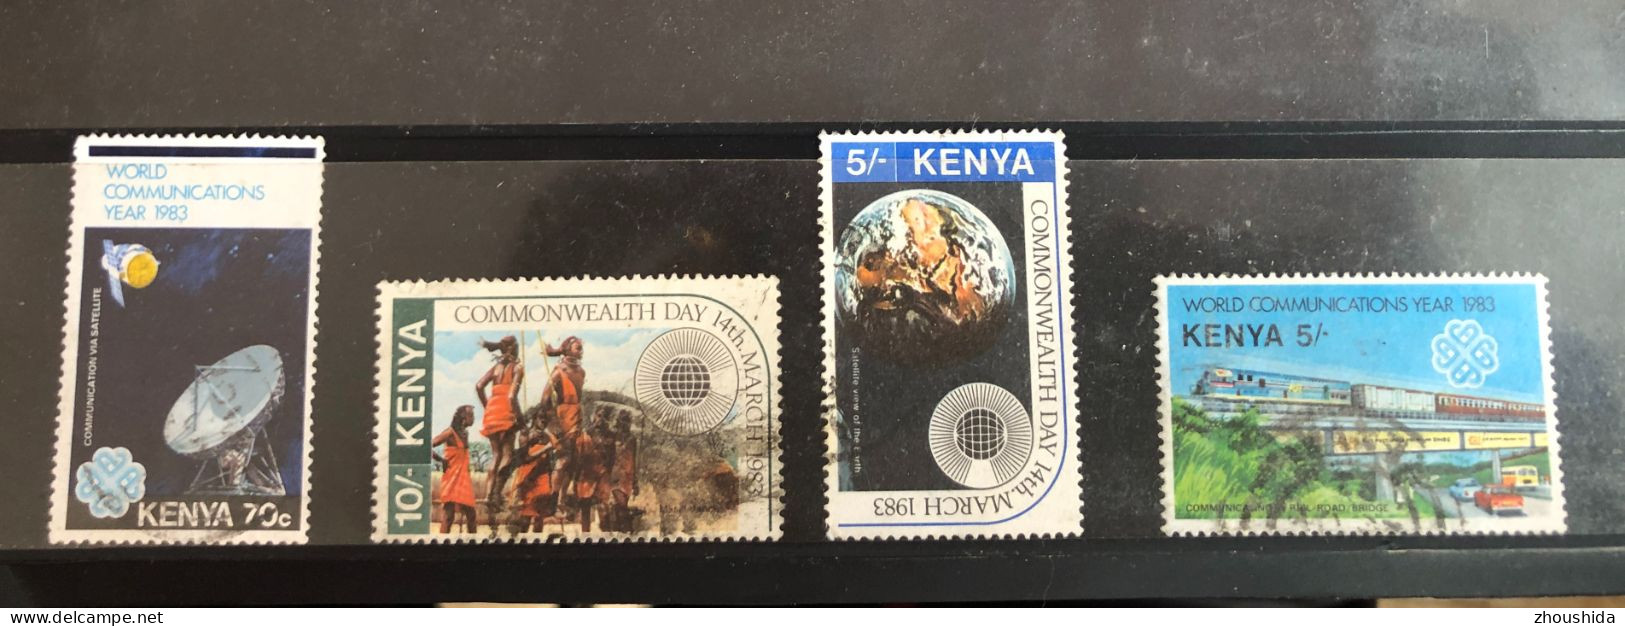 Kenya 1983 British Commonwealth Day (complete Set) Fine Used - Kenya (1963-...)